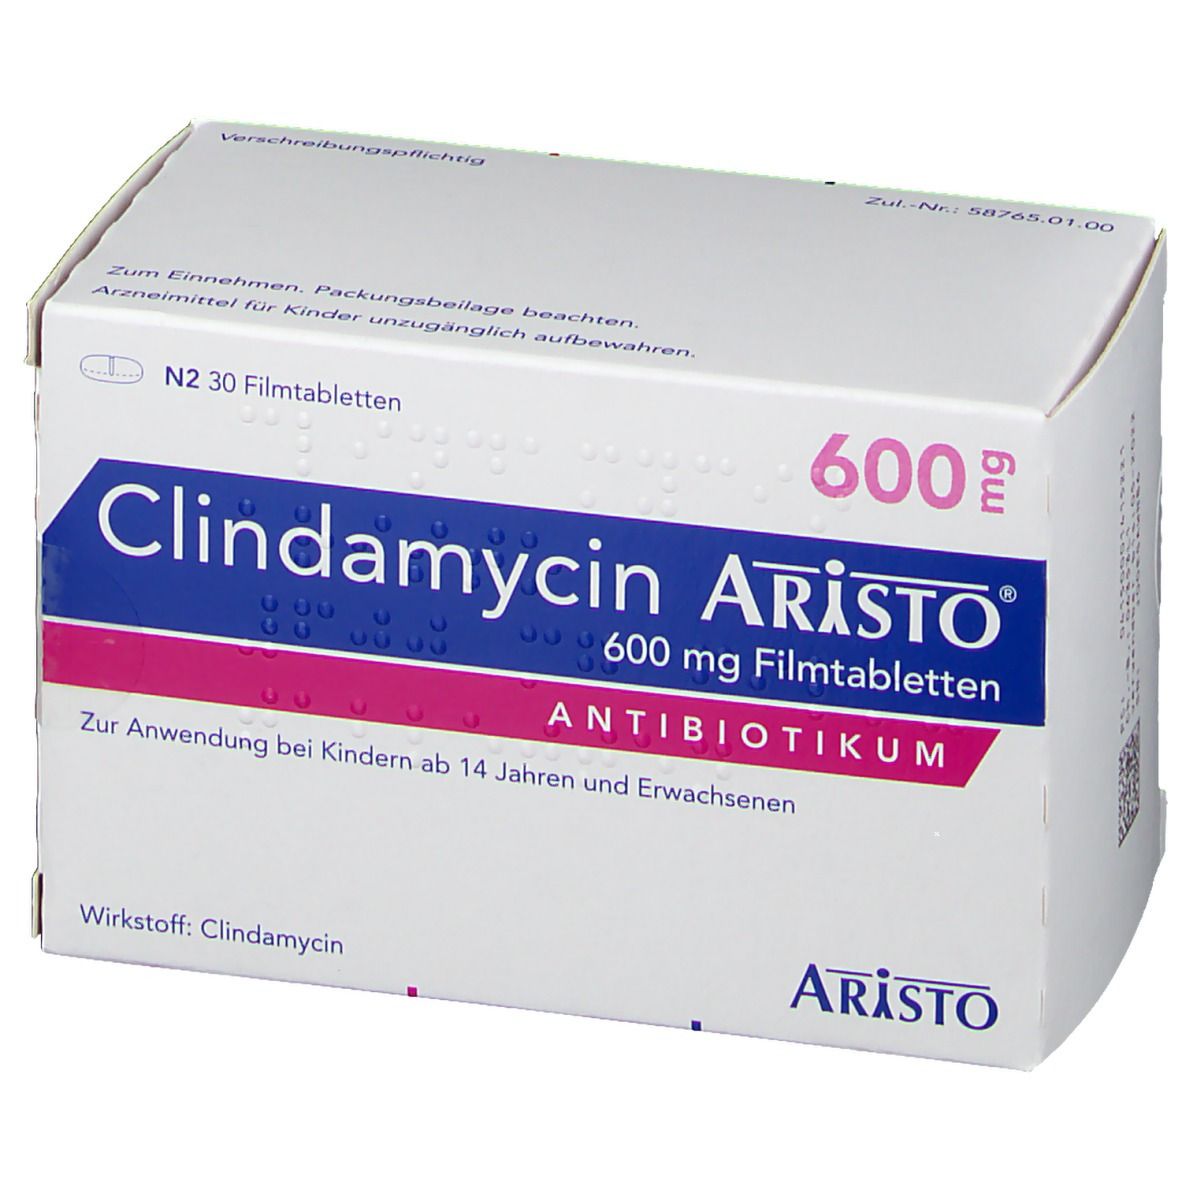 Clindamyzin Aristo® 600 mg